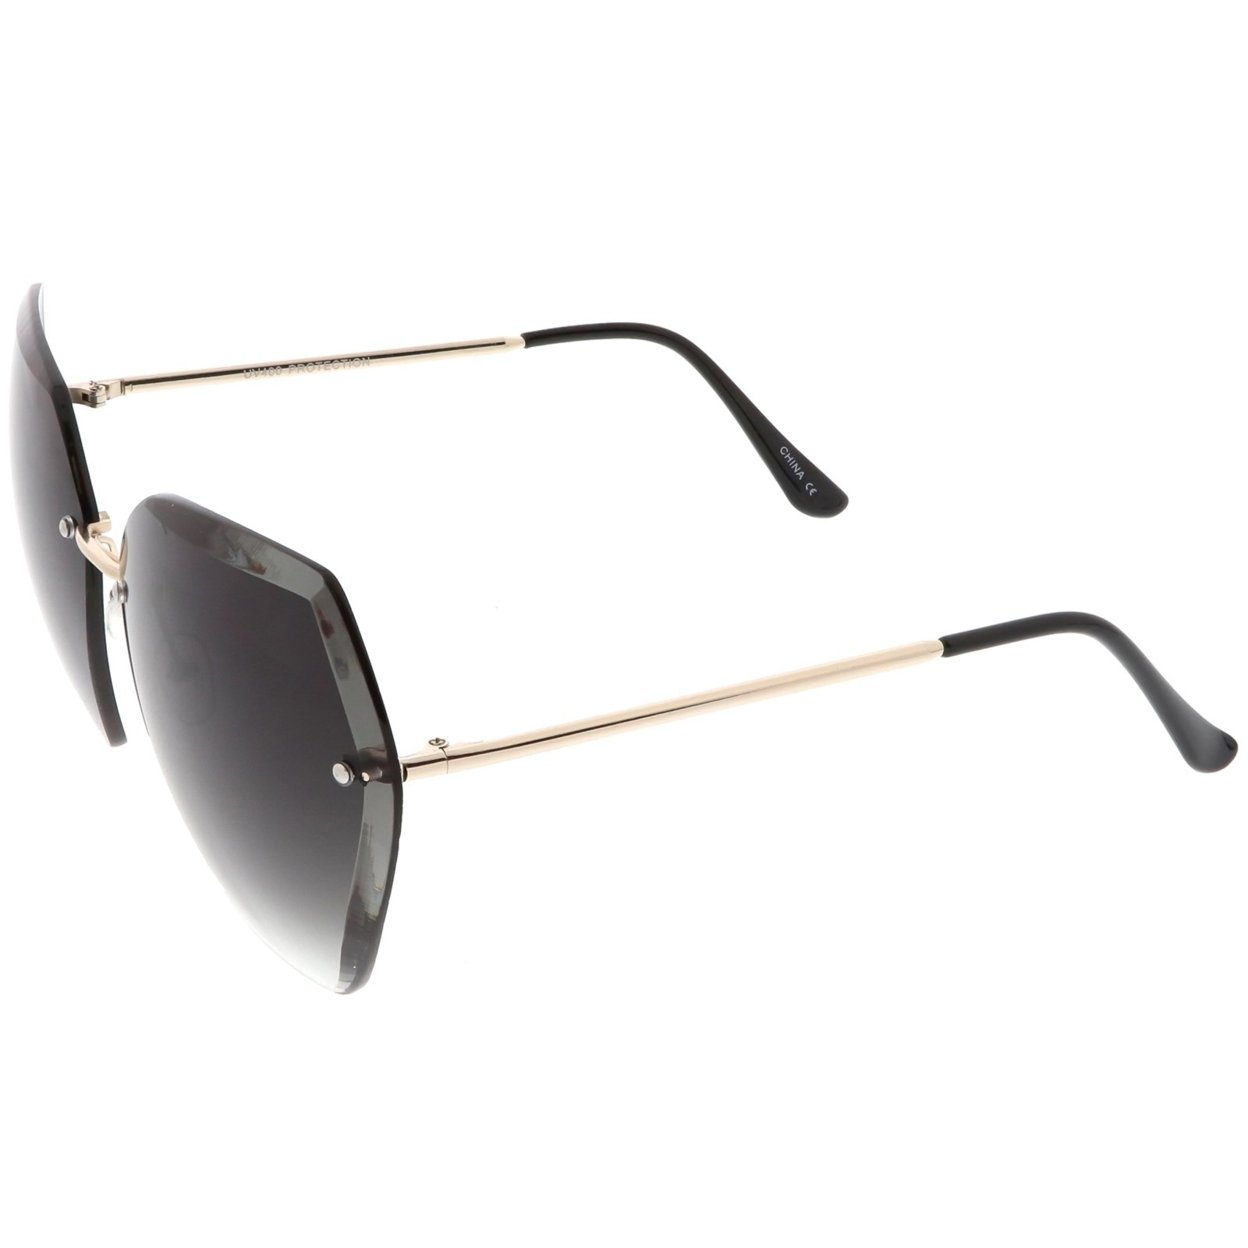 Oversize Rimless Geometric Sunglasses Beveled Gradient Lens 70mm - Silver / Blue Gradient